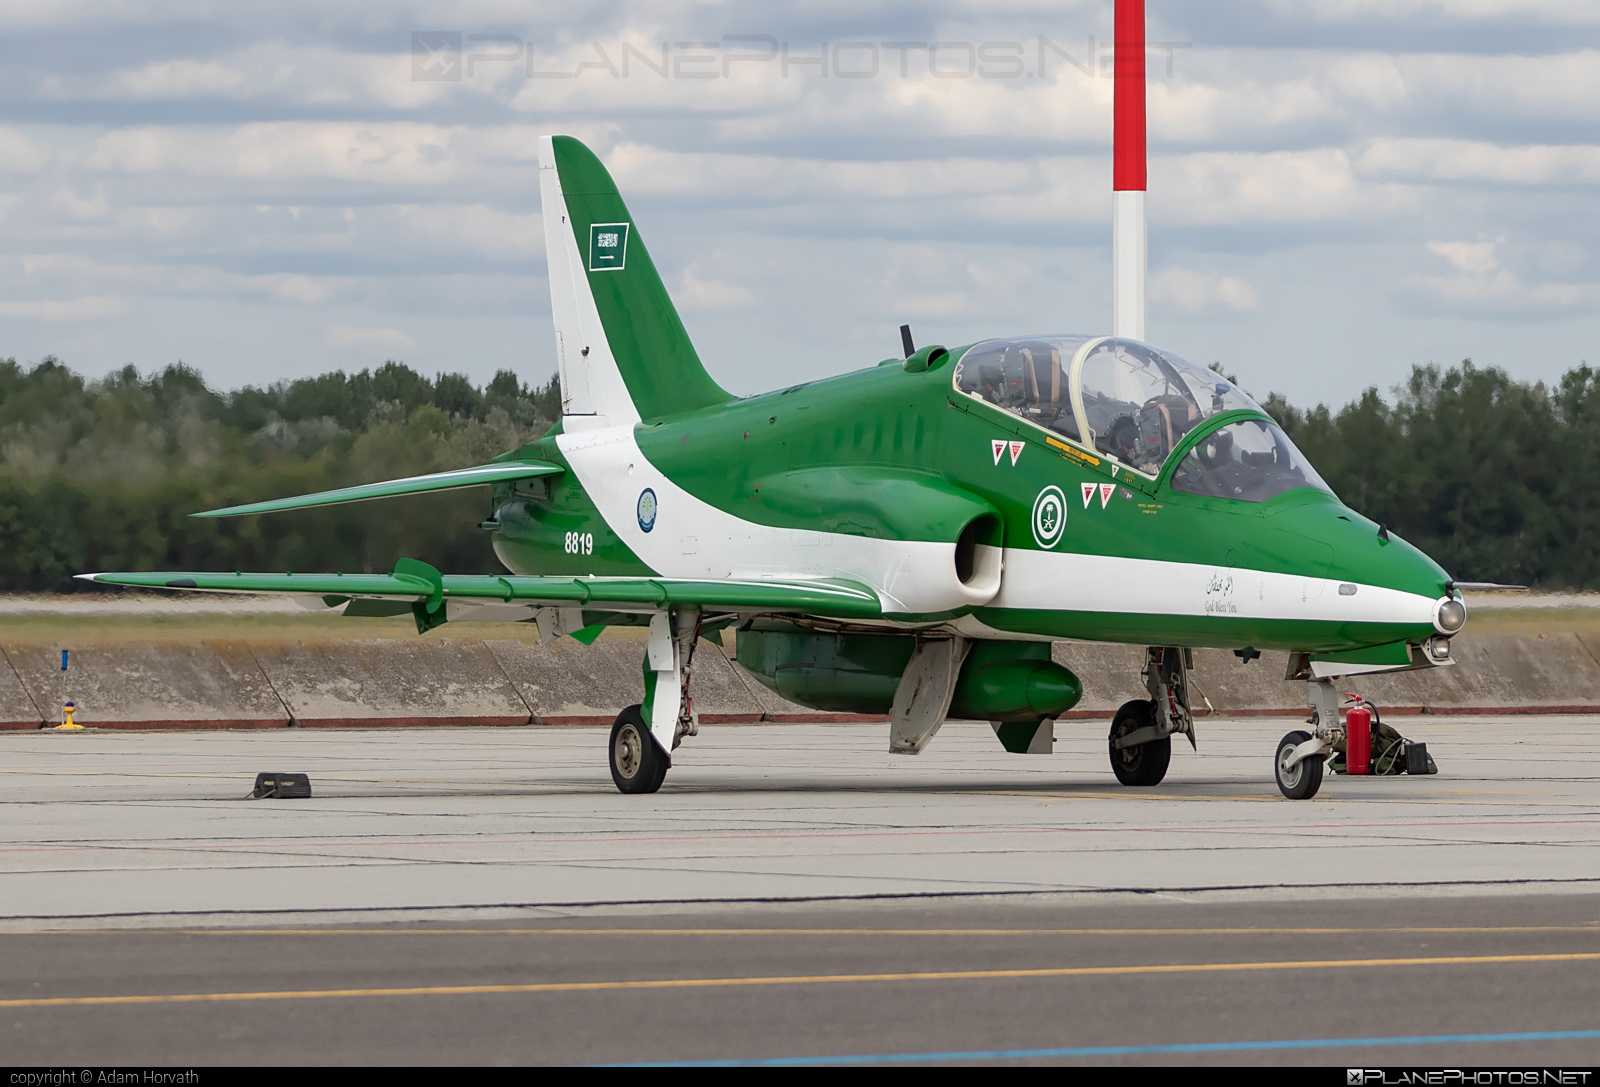 British Aerospace Hawk 65A - 8819 operated by Royal Saudi Air Force #RoyalSaudiAirForce #baehawk #britishaerospace #britishaerospacehawk #hawk65a #kecskemetairshow2021 #saudihawks